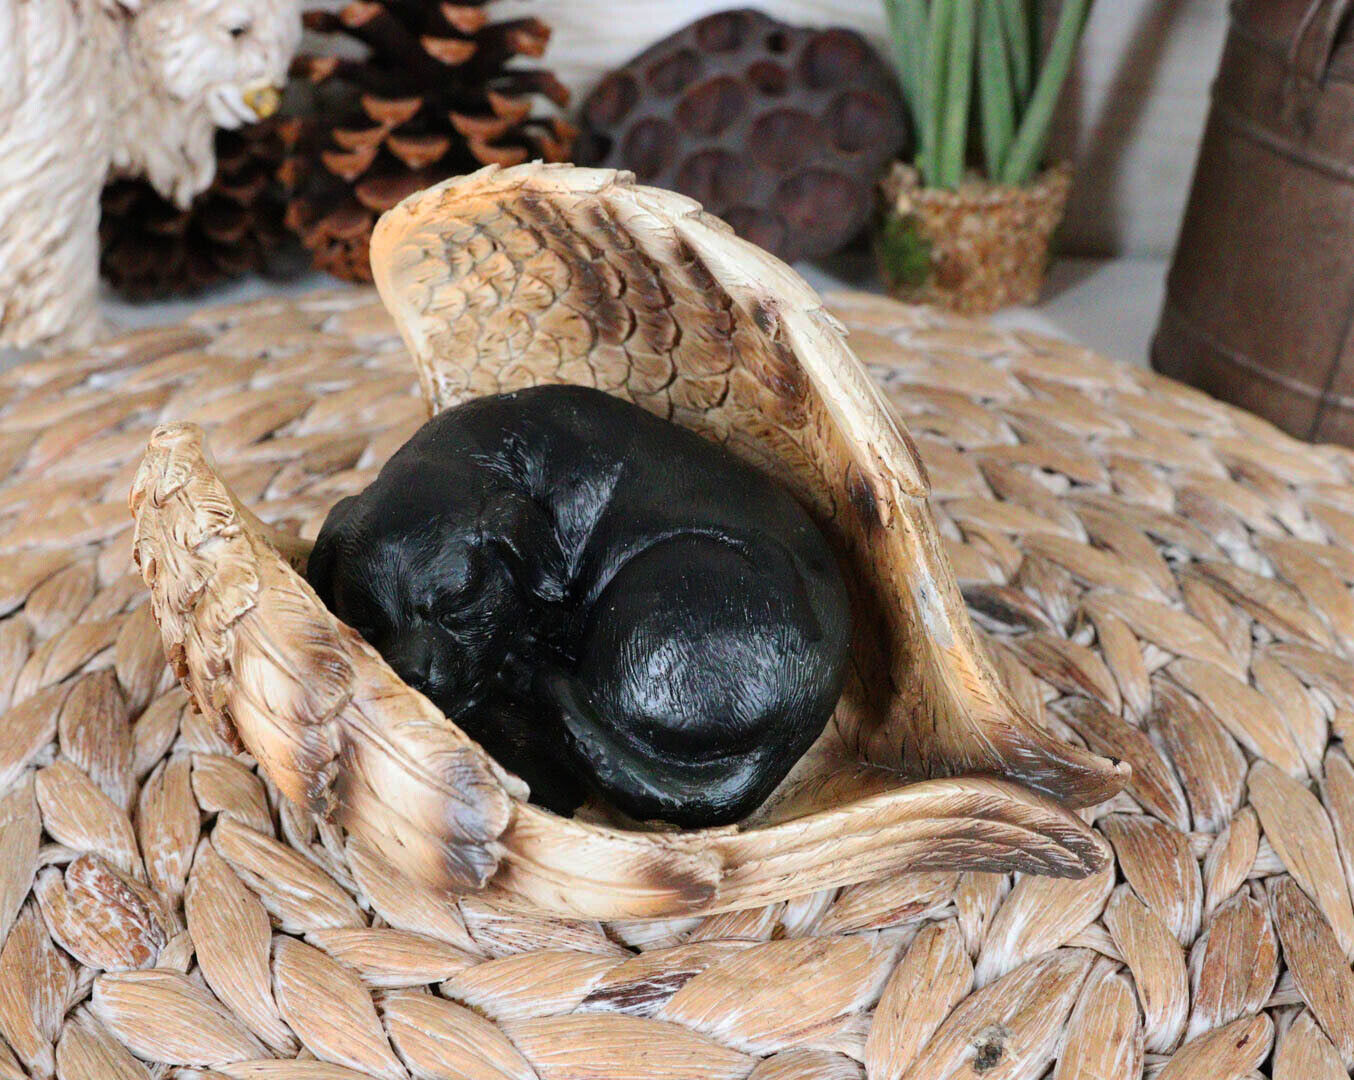 Black Labrador Retriever Puppy Dogs Sleeping On Angel Wings Memorial Figurine